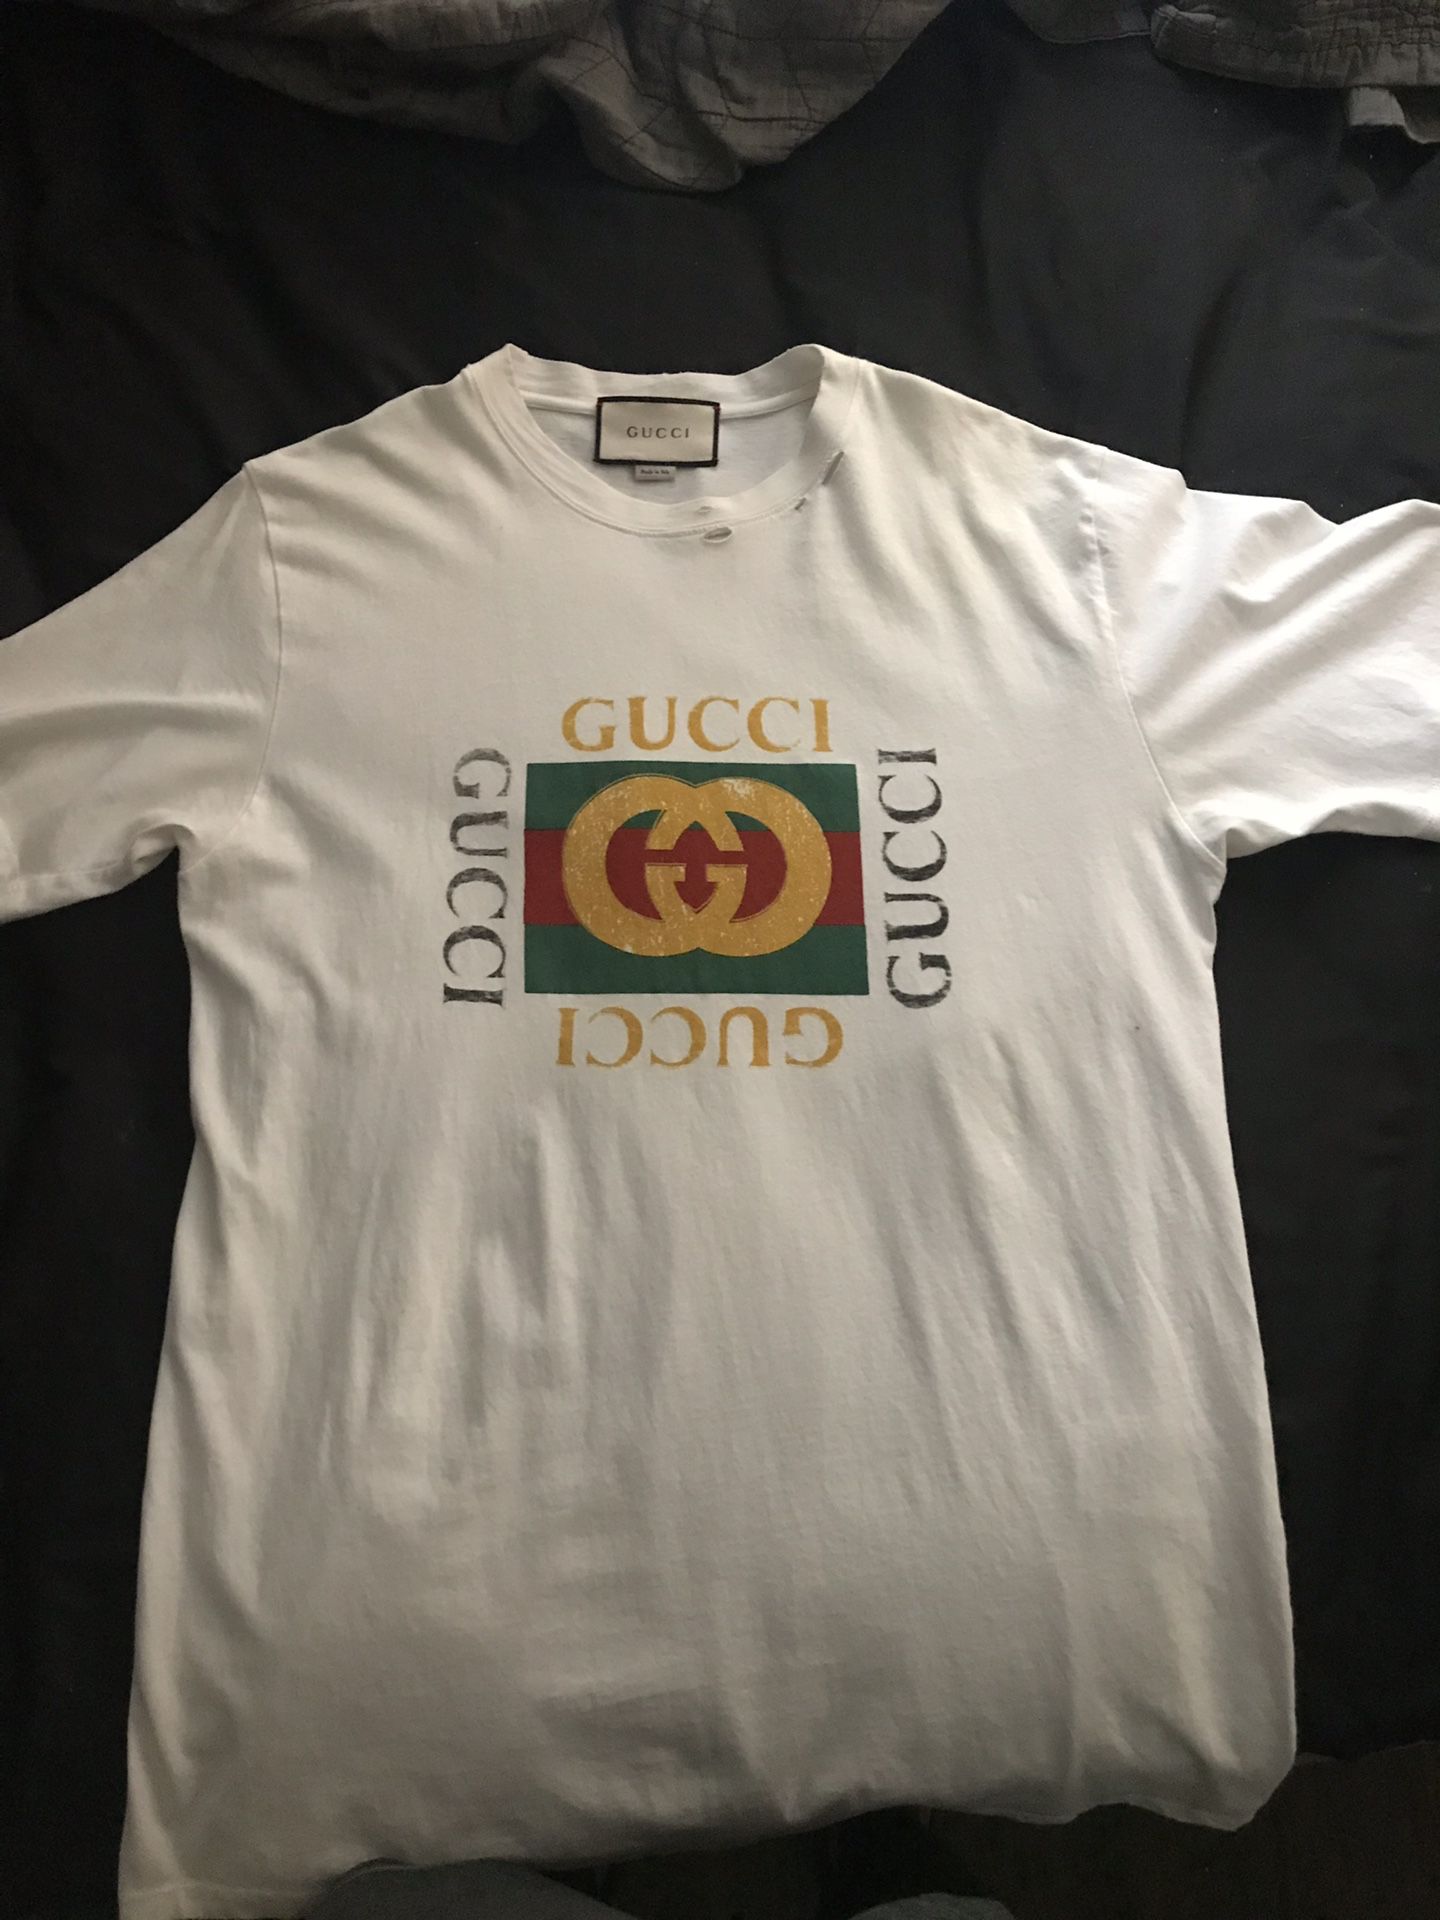 Gucci T-shirt size Large